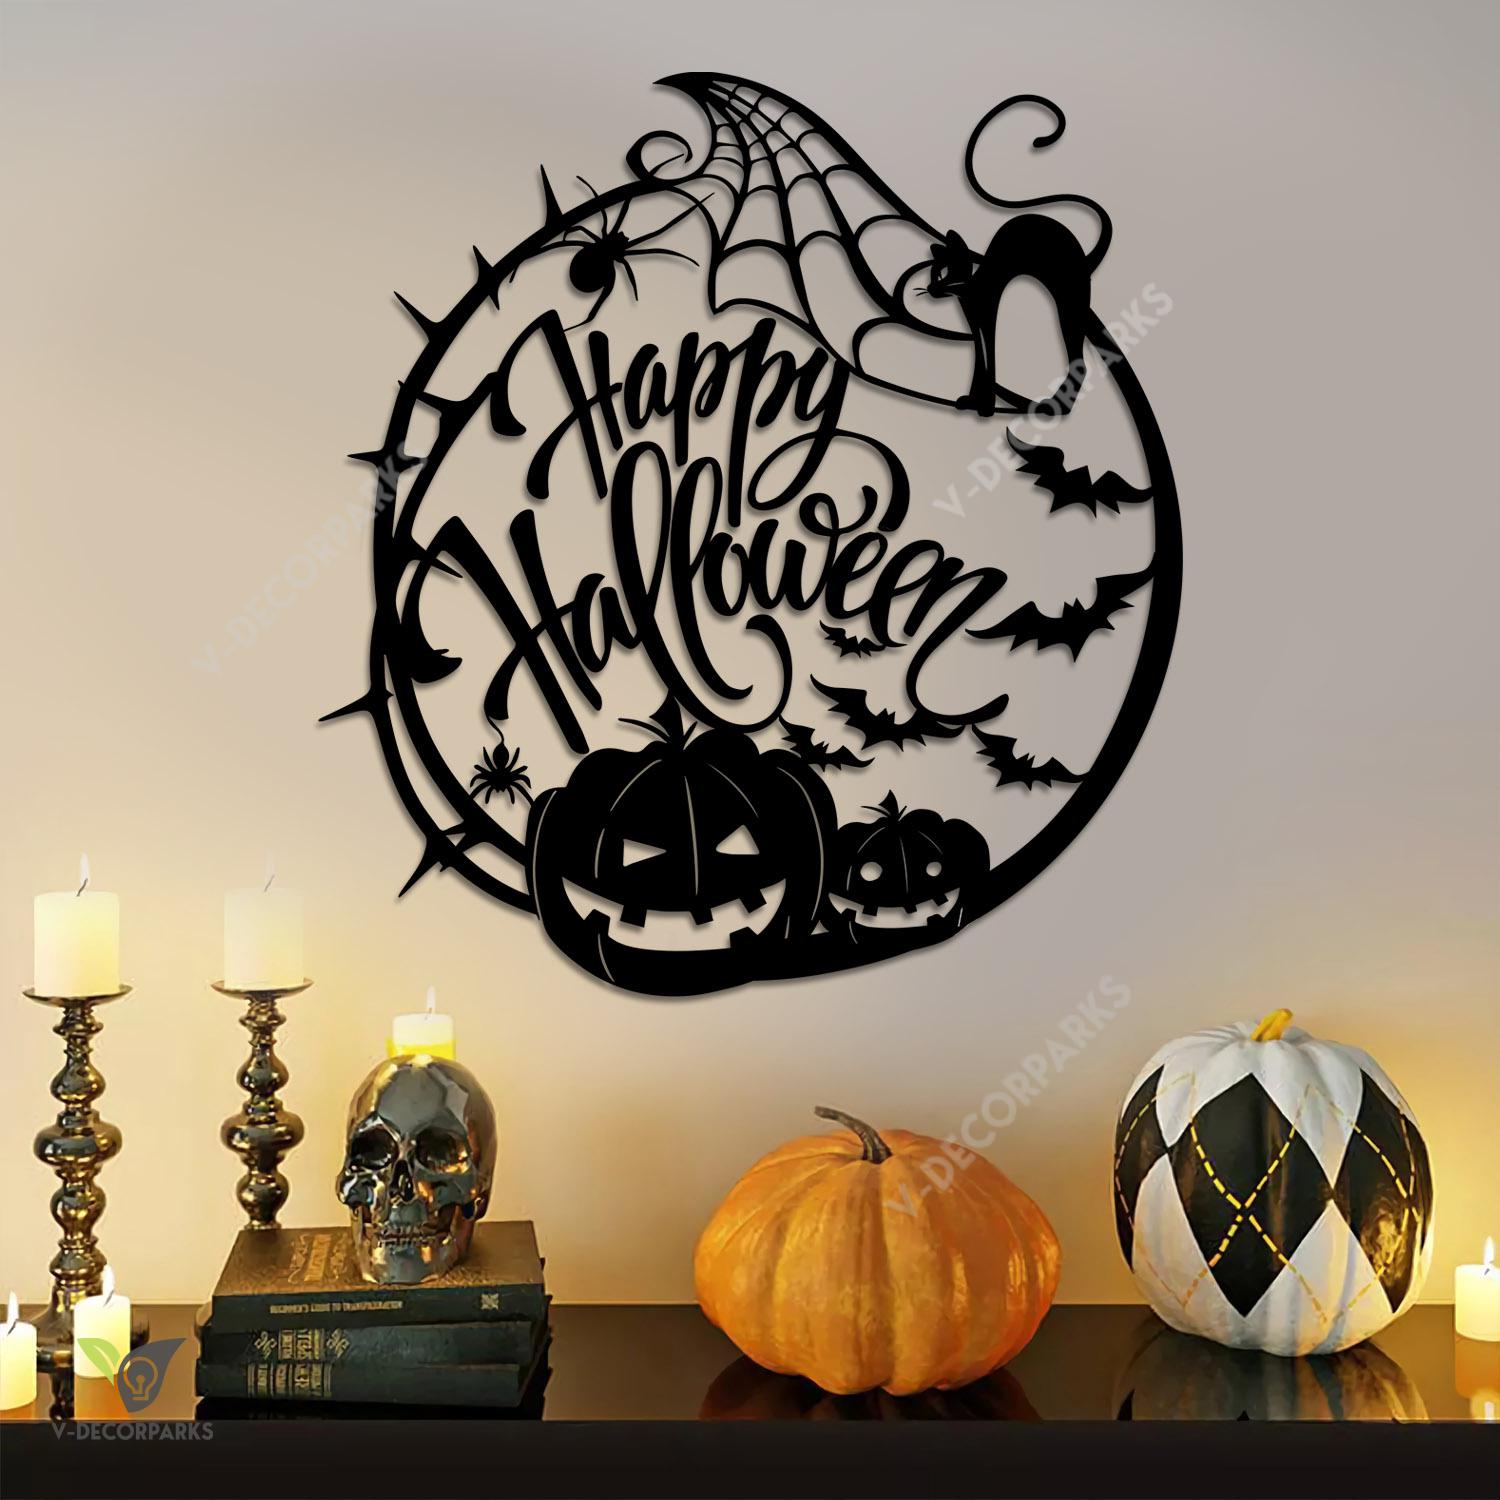 Happy Halloween With Pumpkins, Bats, Black Cat And Sipder Metal Art, Halloween Decorative Artwork